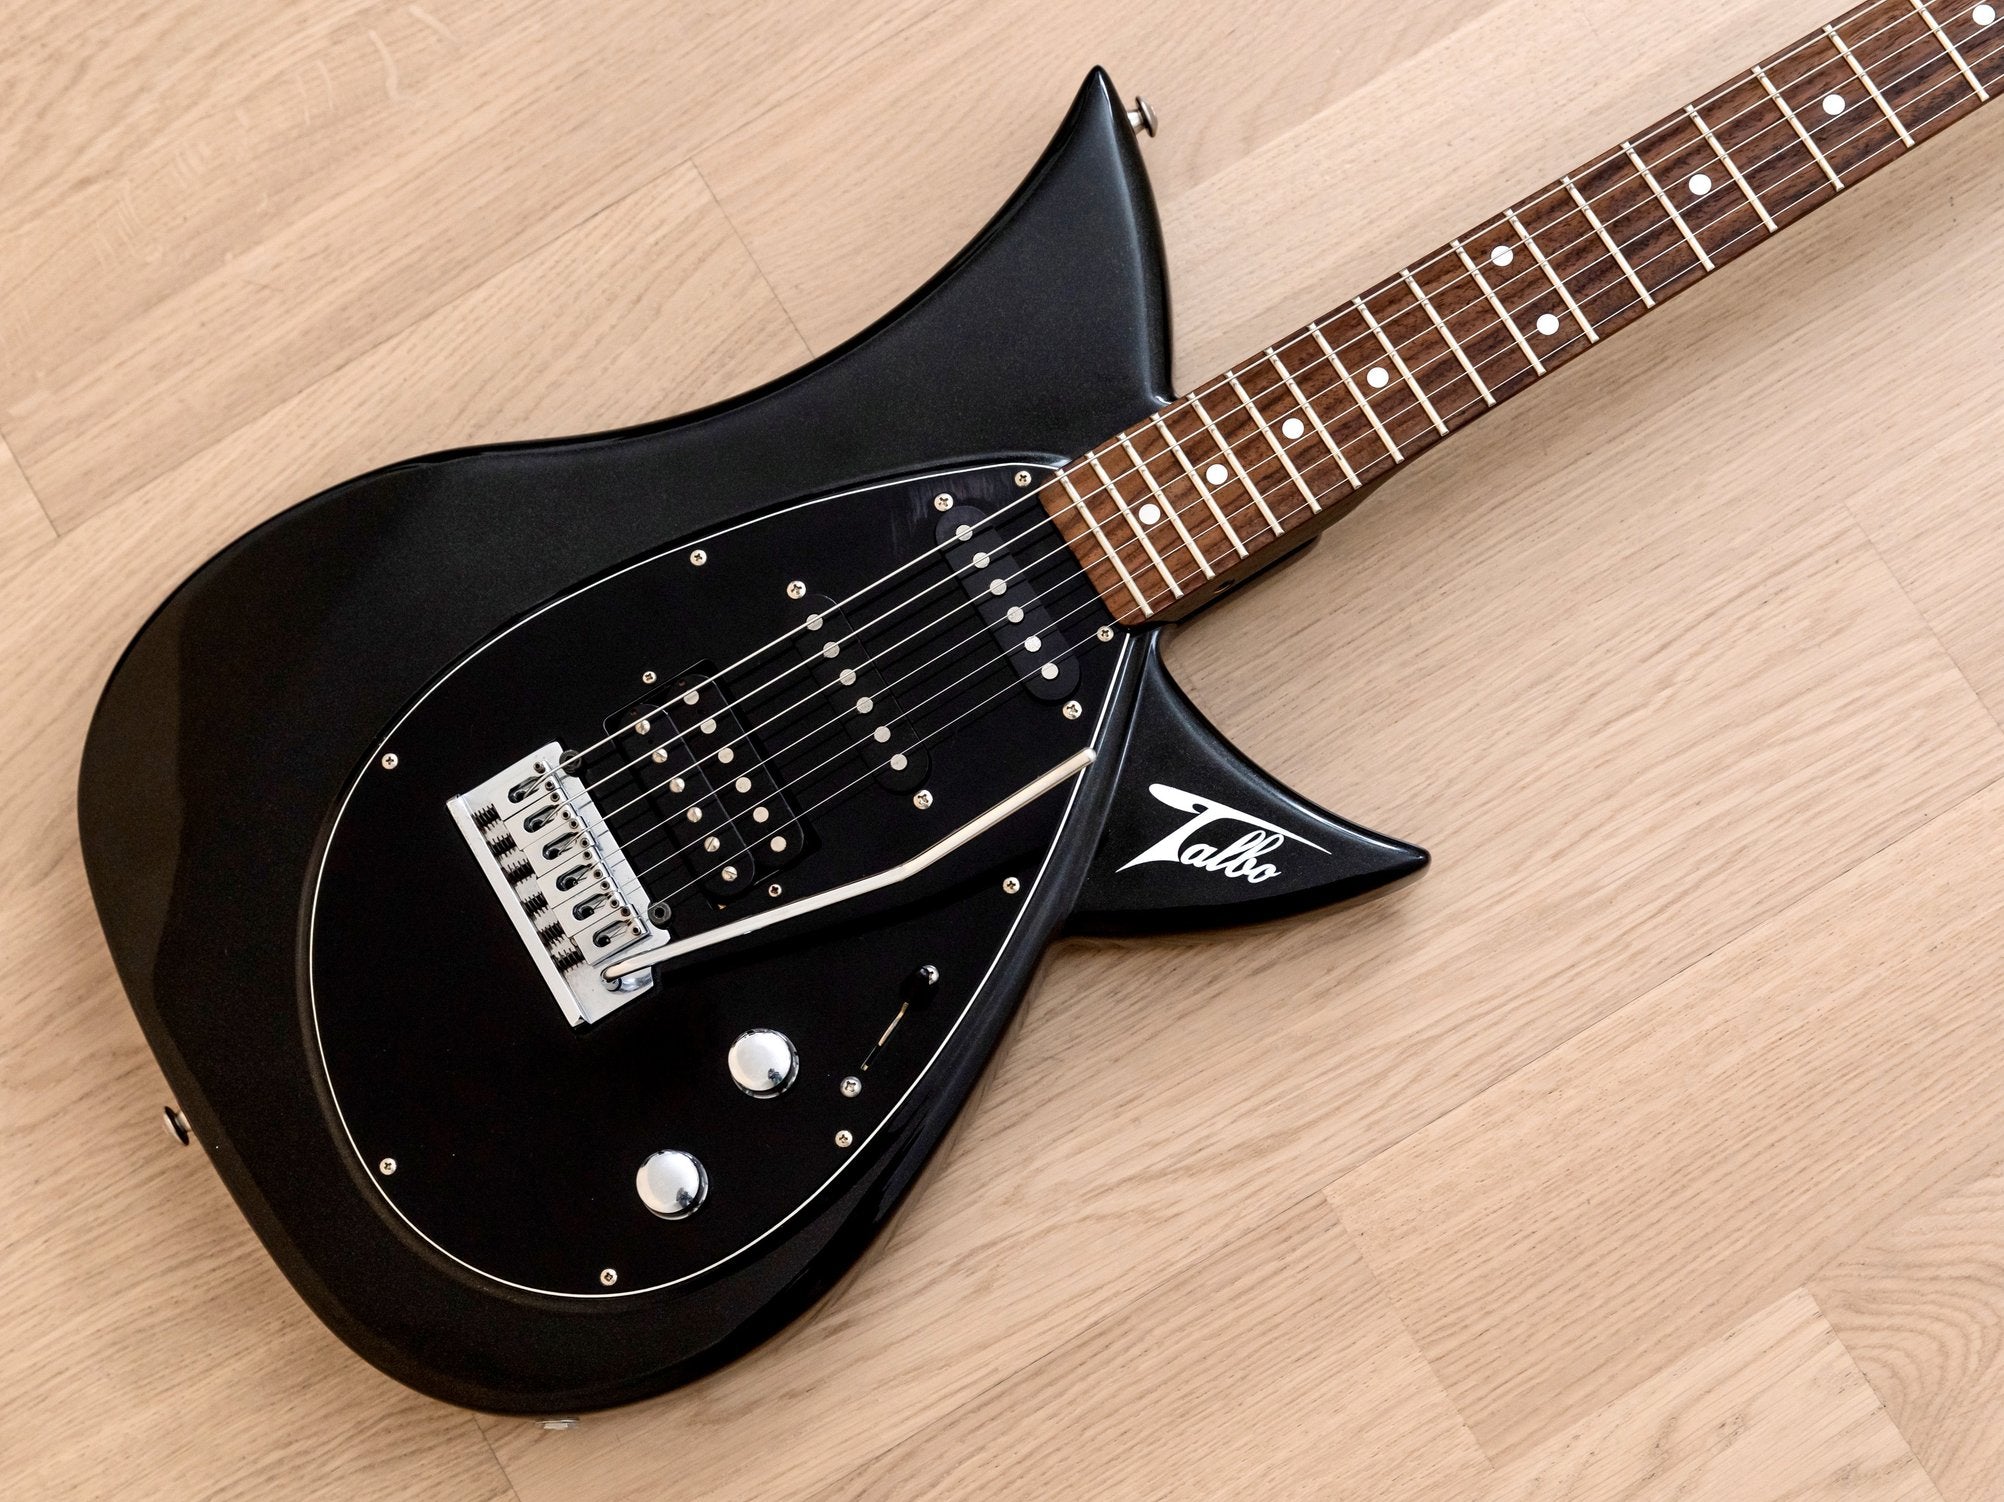 1990s Tokai Talbo A-125SH Aluminum Body Guitar Black Sparkle, Japan